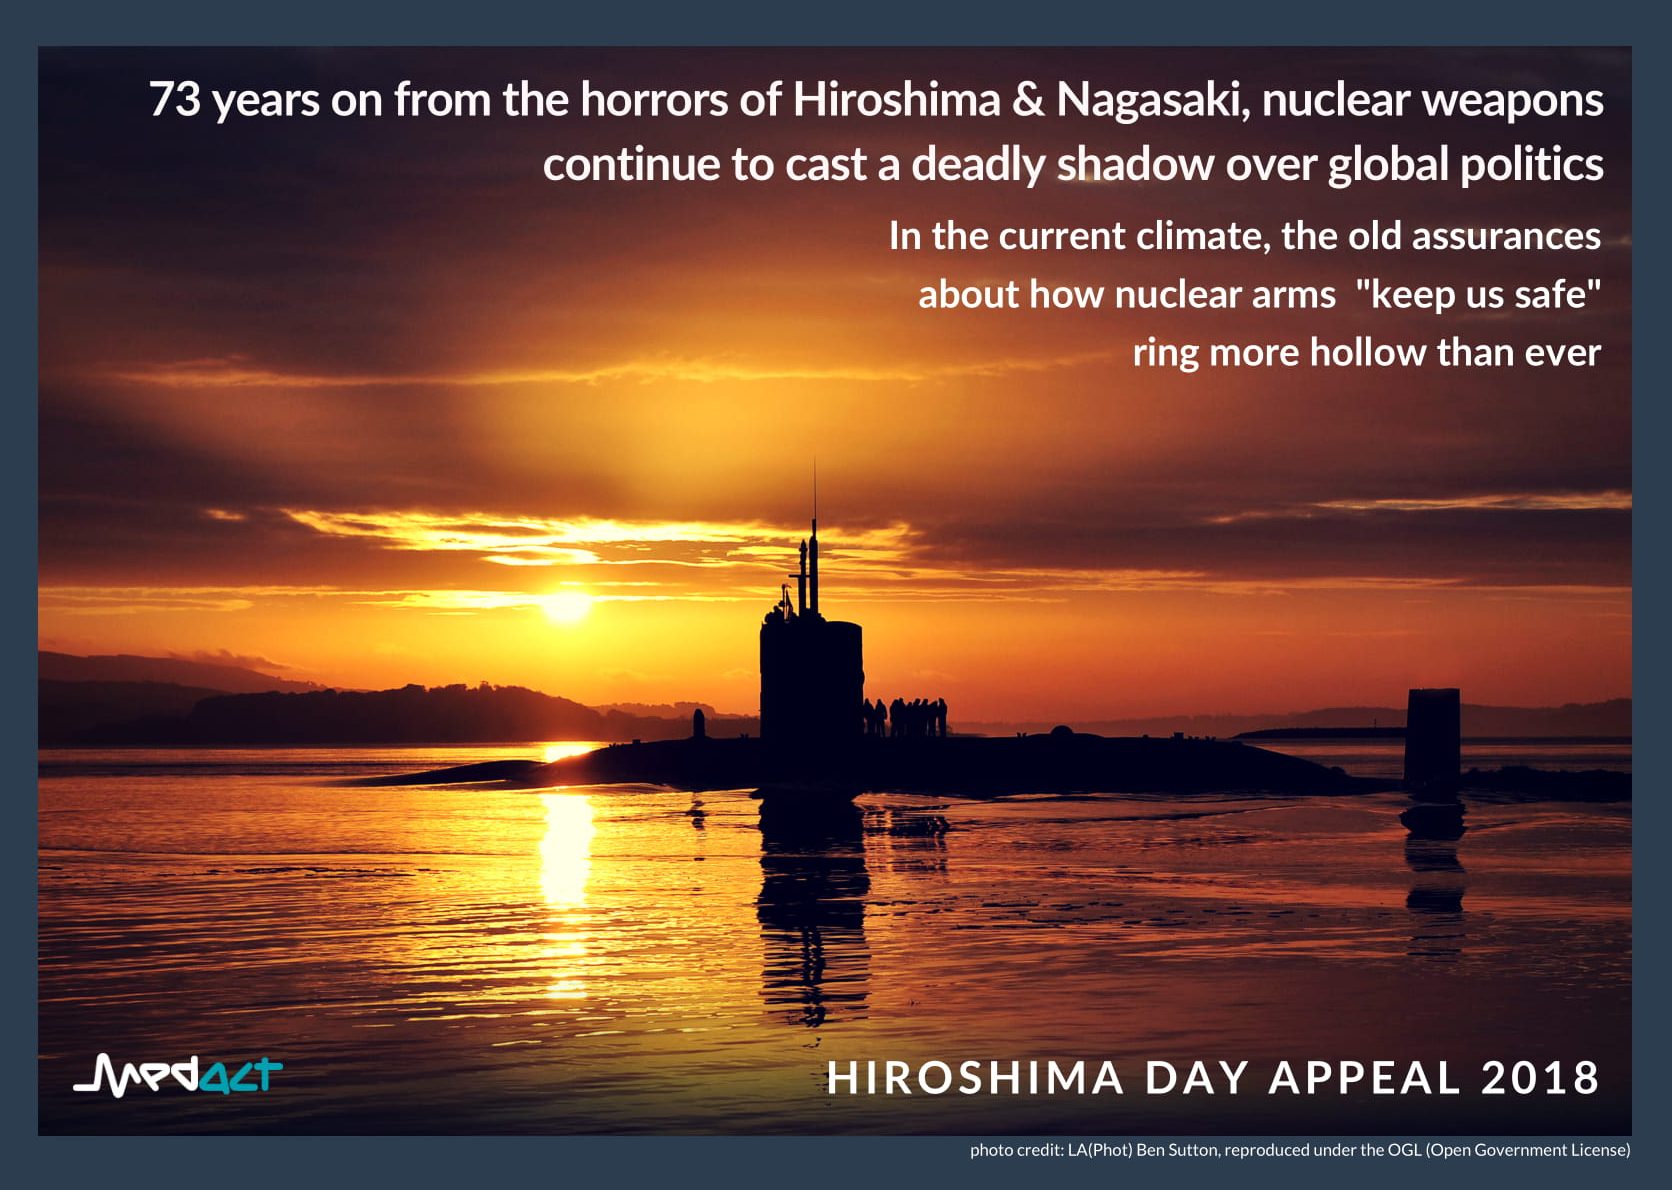 Hiroshima Day Appeal 2018